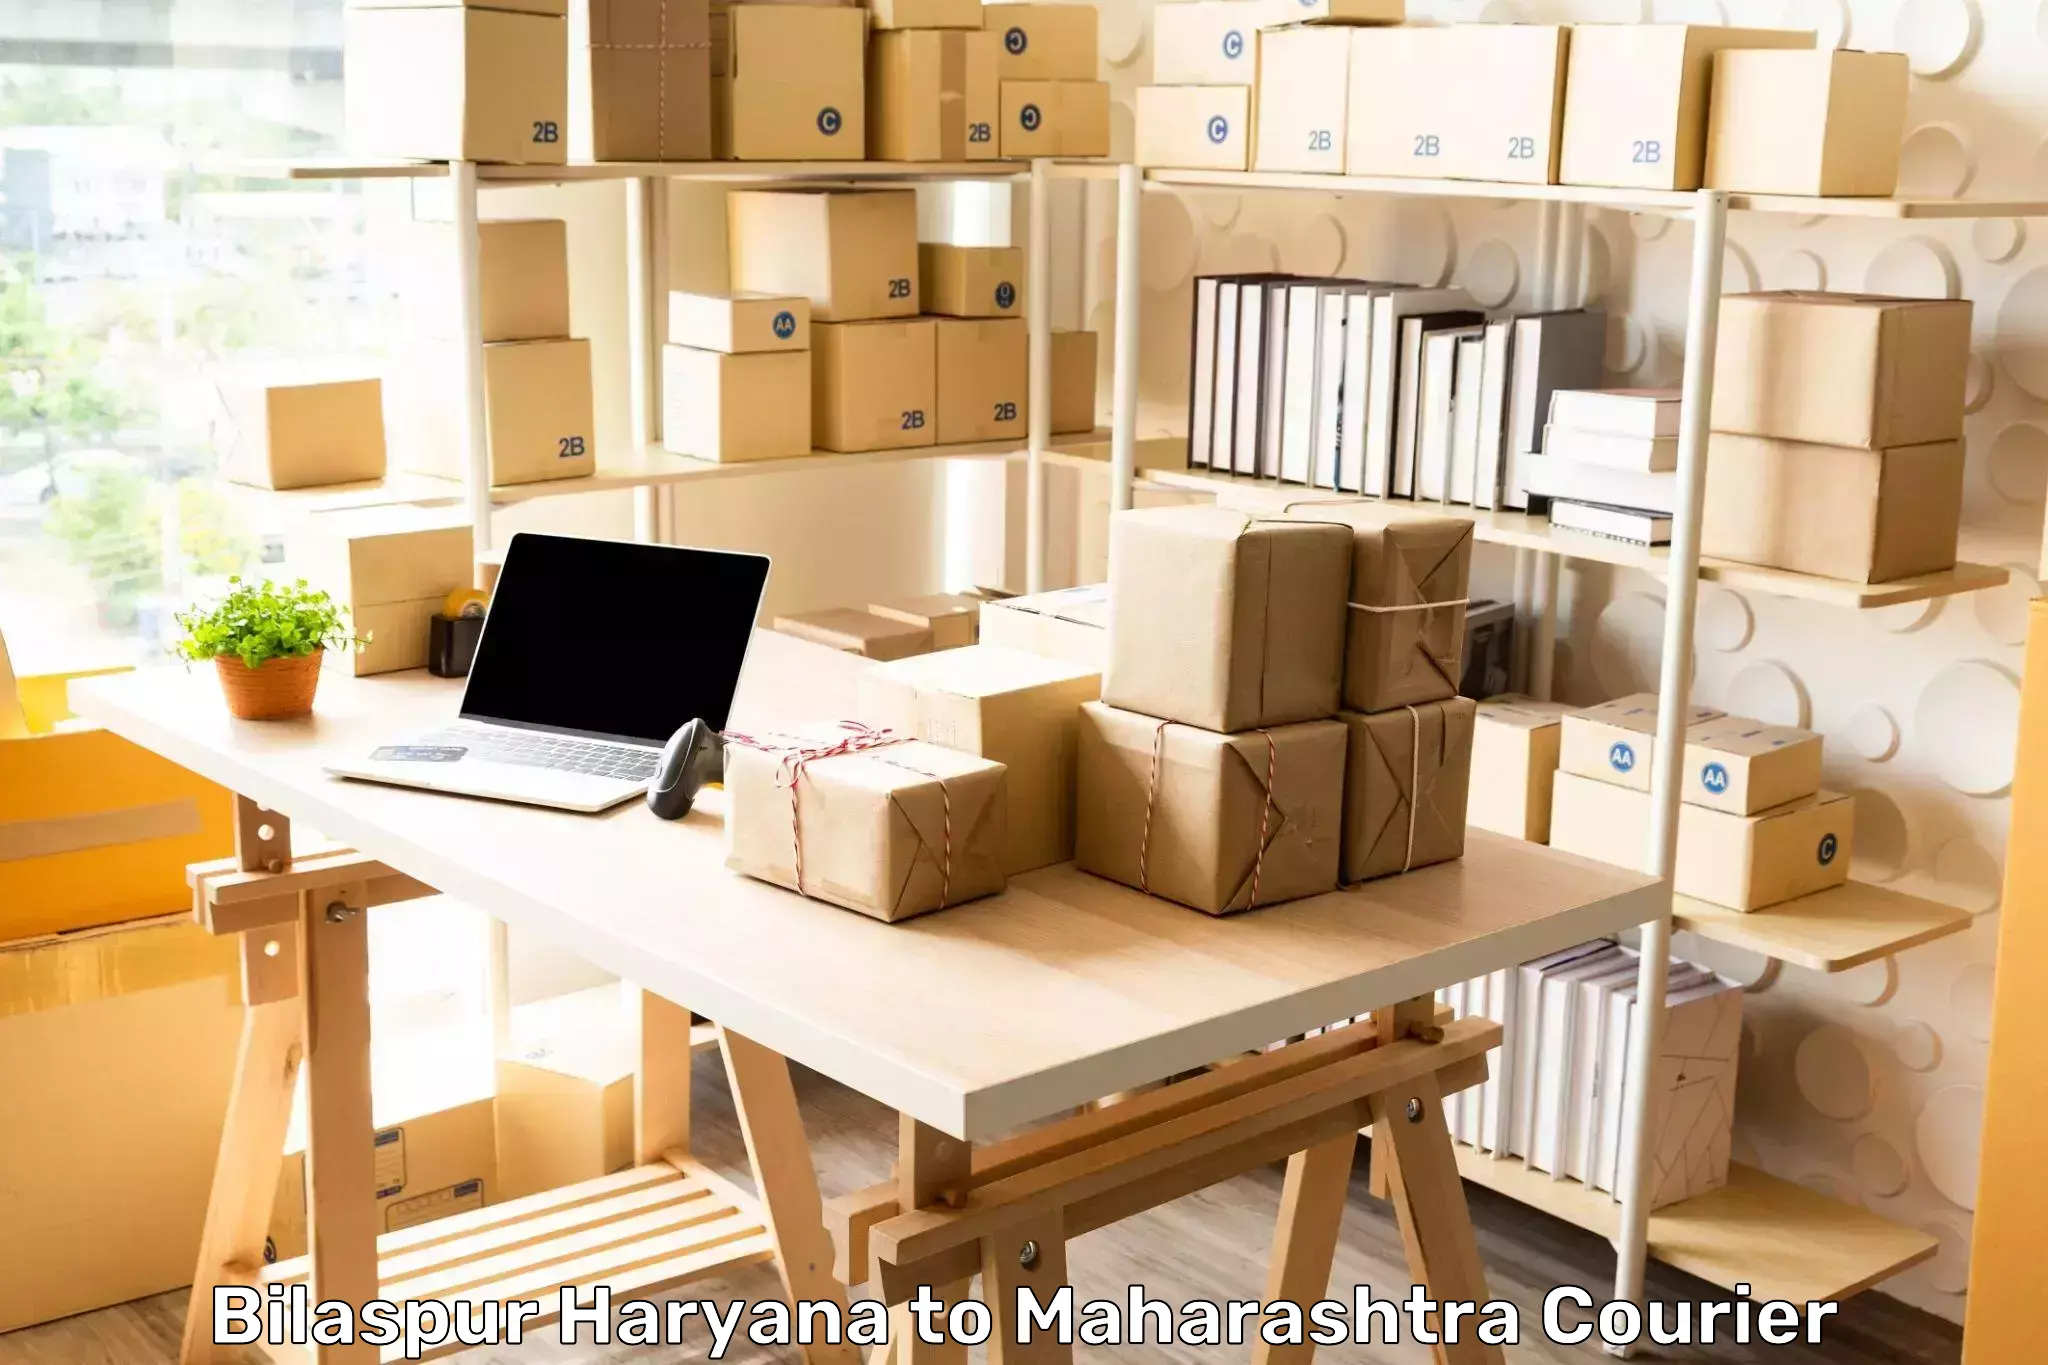 Flexible delivery schedules Bilaspur Haryana to Aurangabad